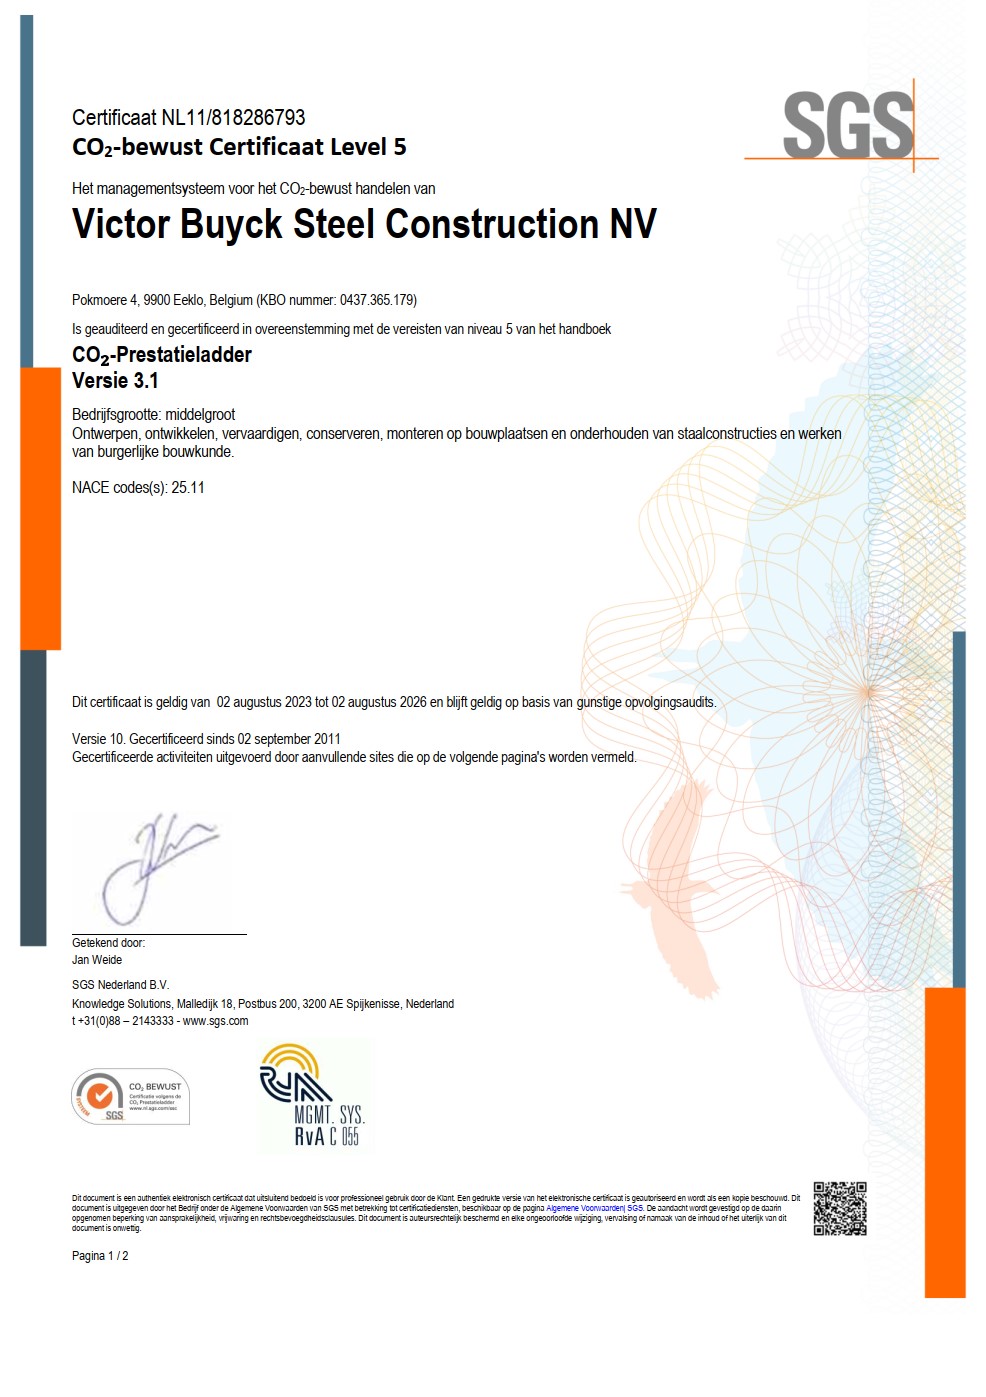 Victor Buyck Steel Construction - CO2 Prestatieladder niveau 5 certificaat (NL).jpg